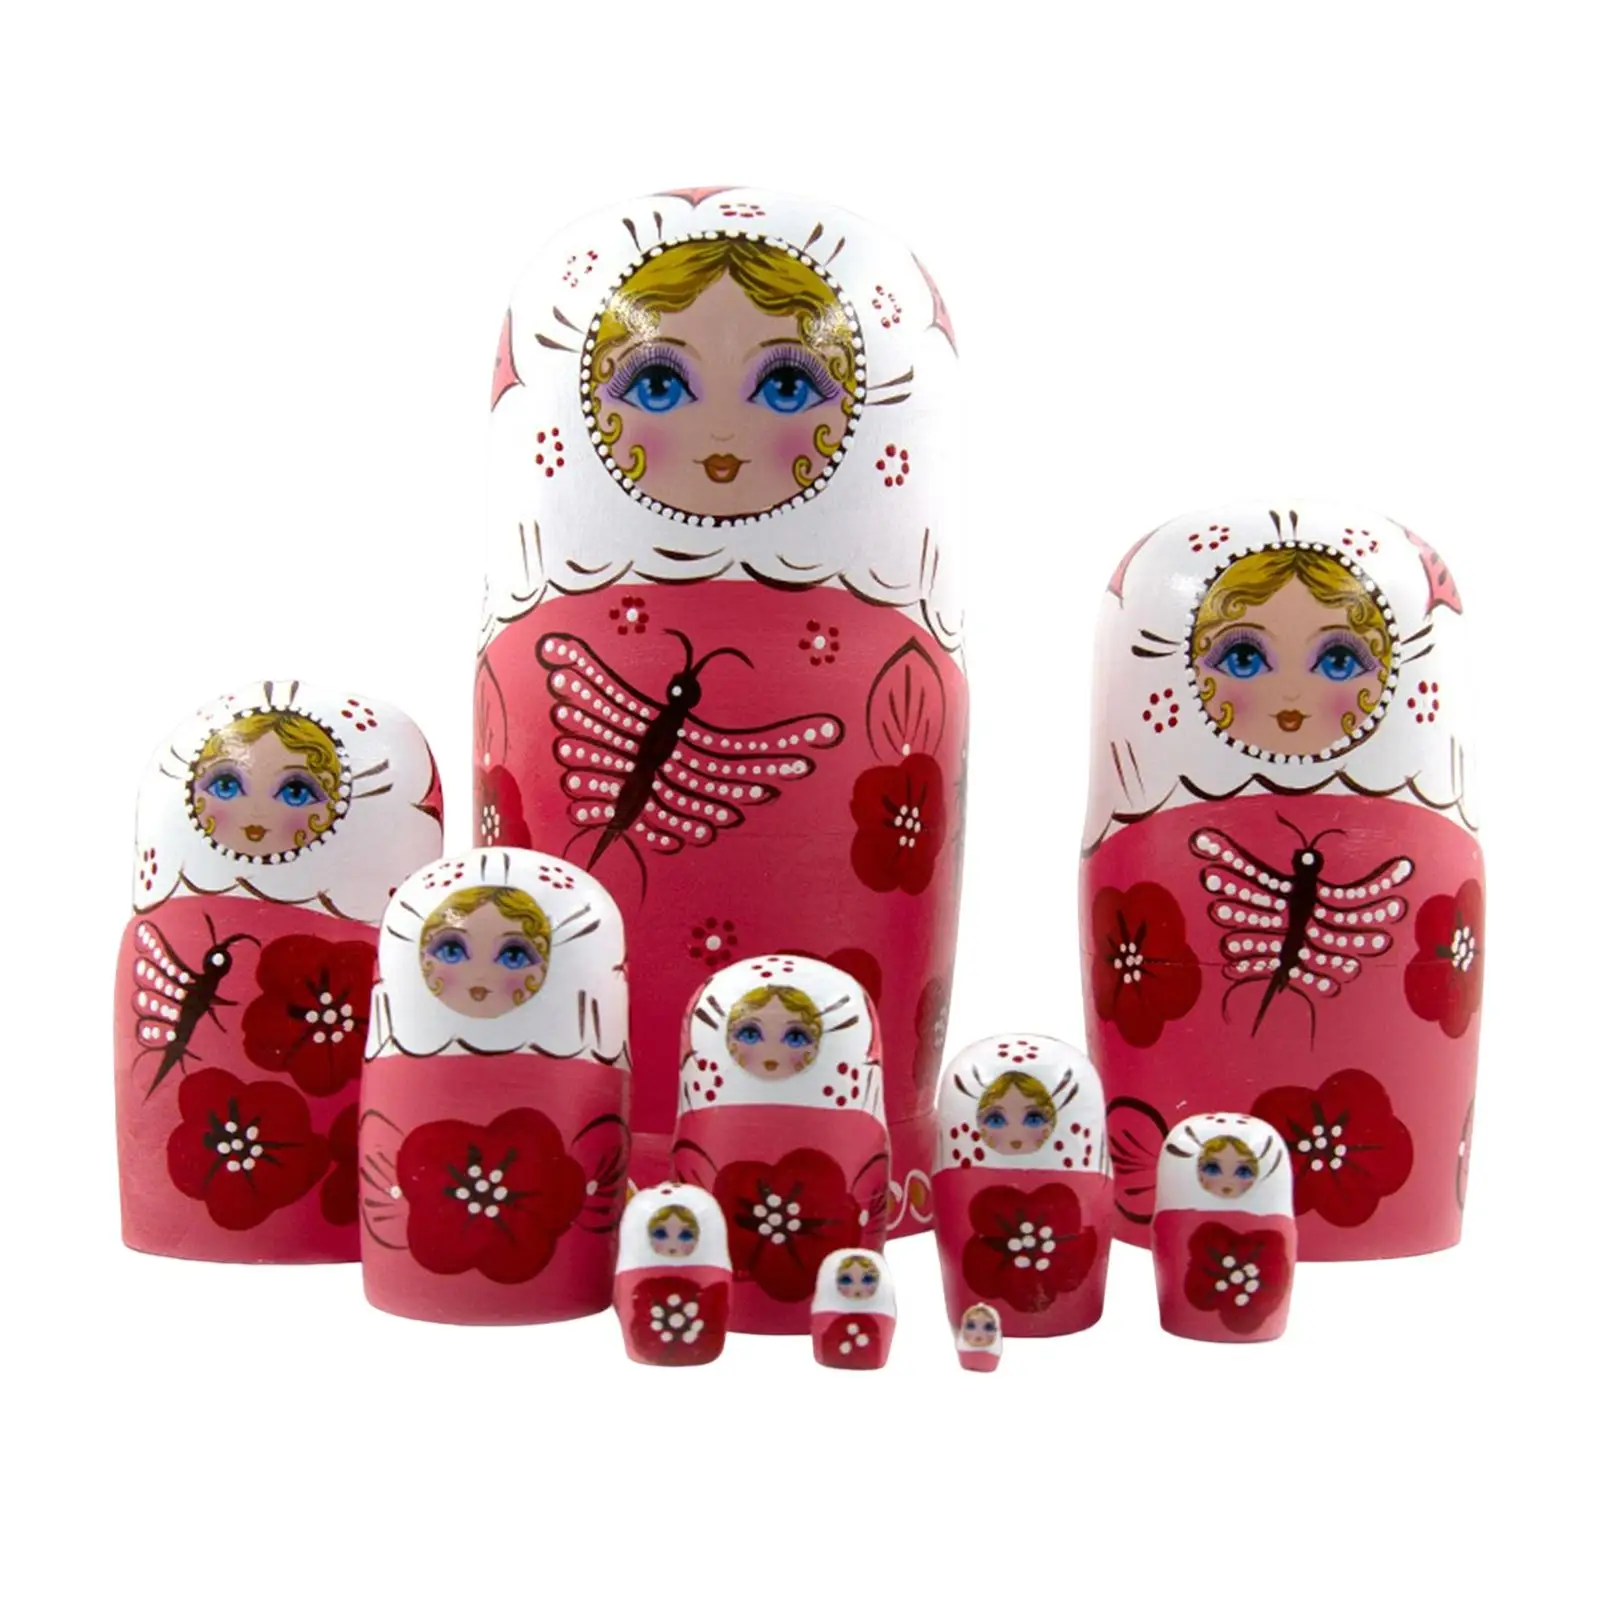 Russian Girls Nesting Dolls Matryoshka Stacking Toy Pink Dragonfly 10 Layers